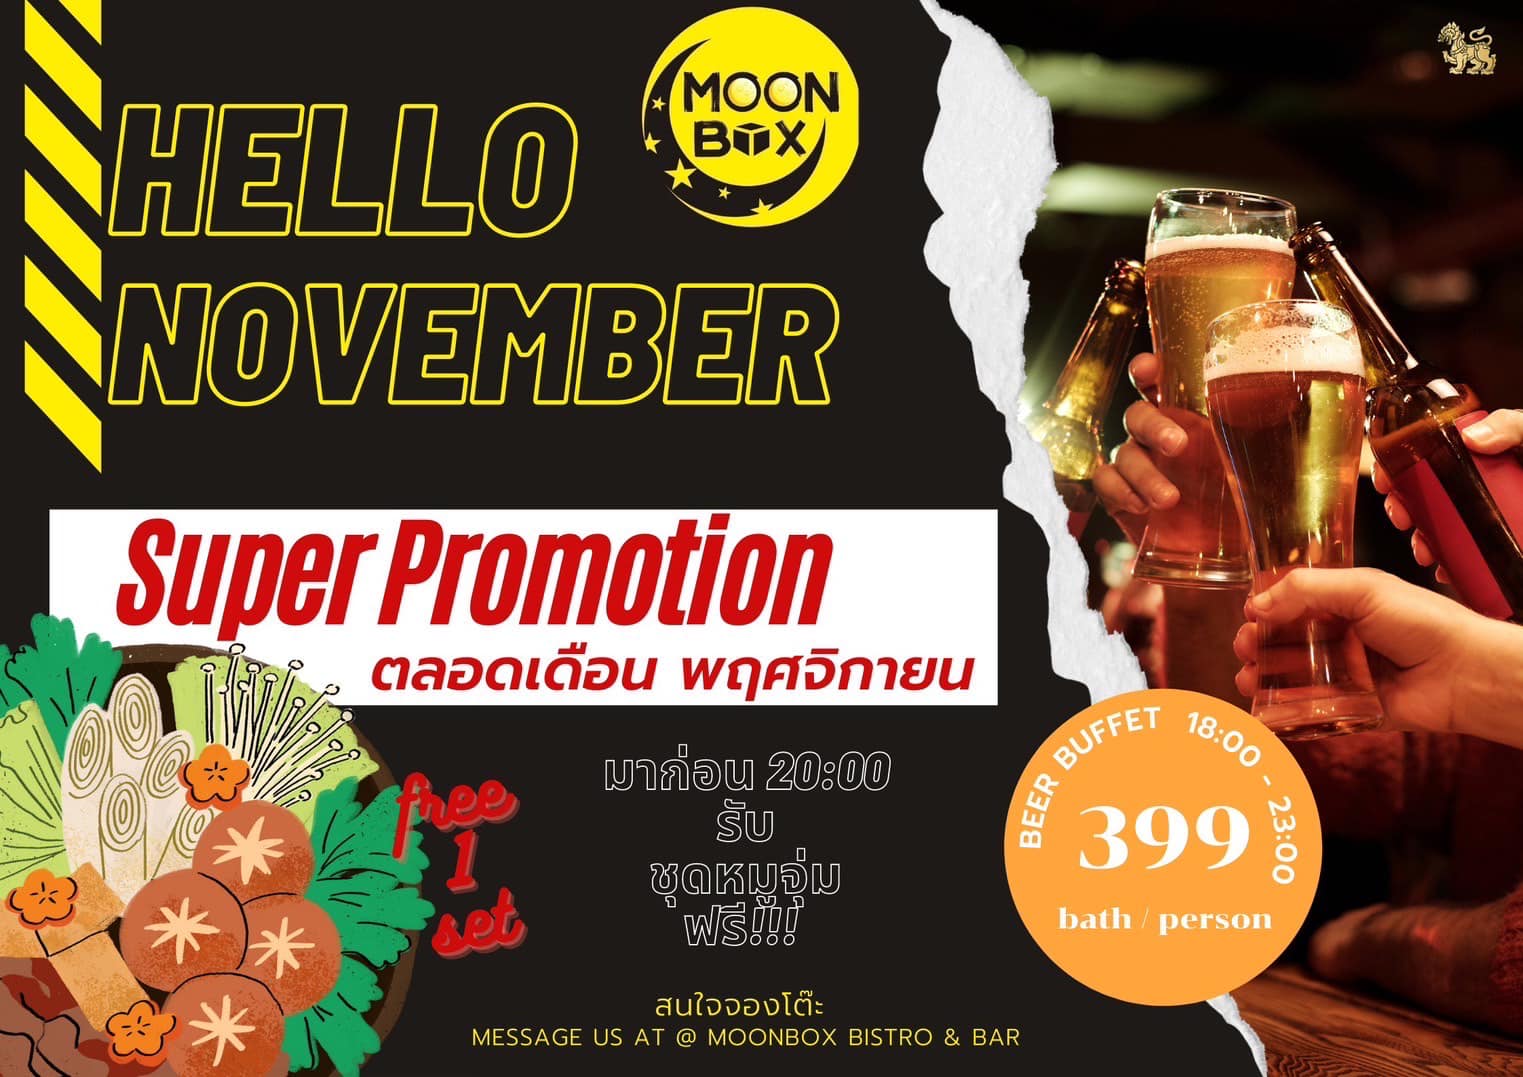 Moonbox Bistro & Bar @Chiangmai